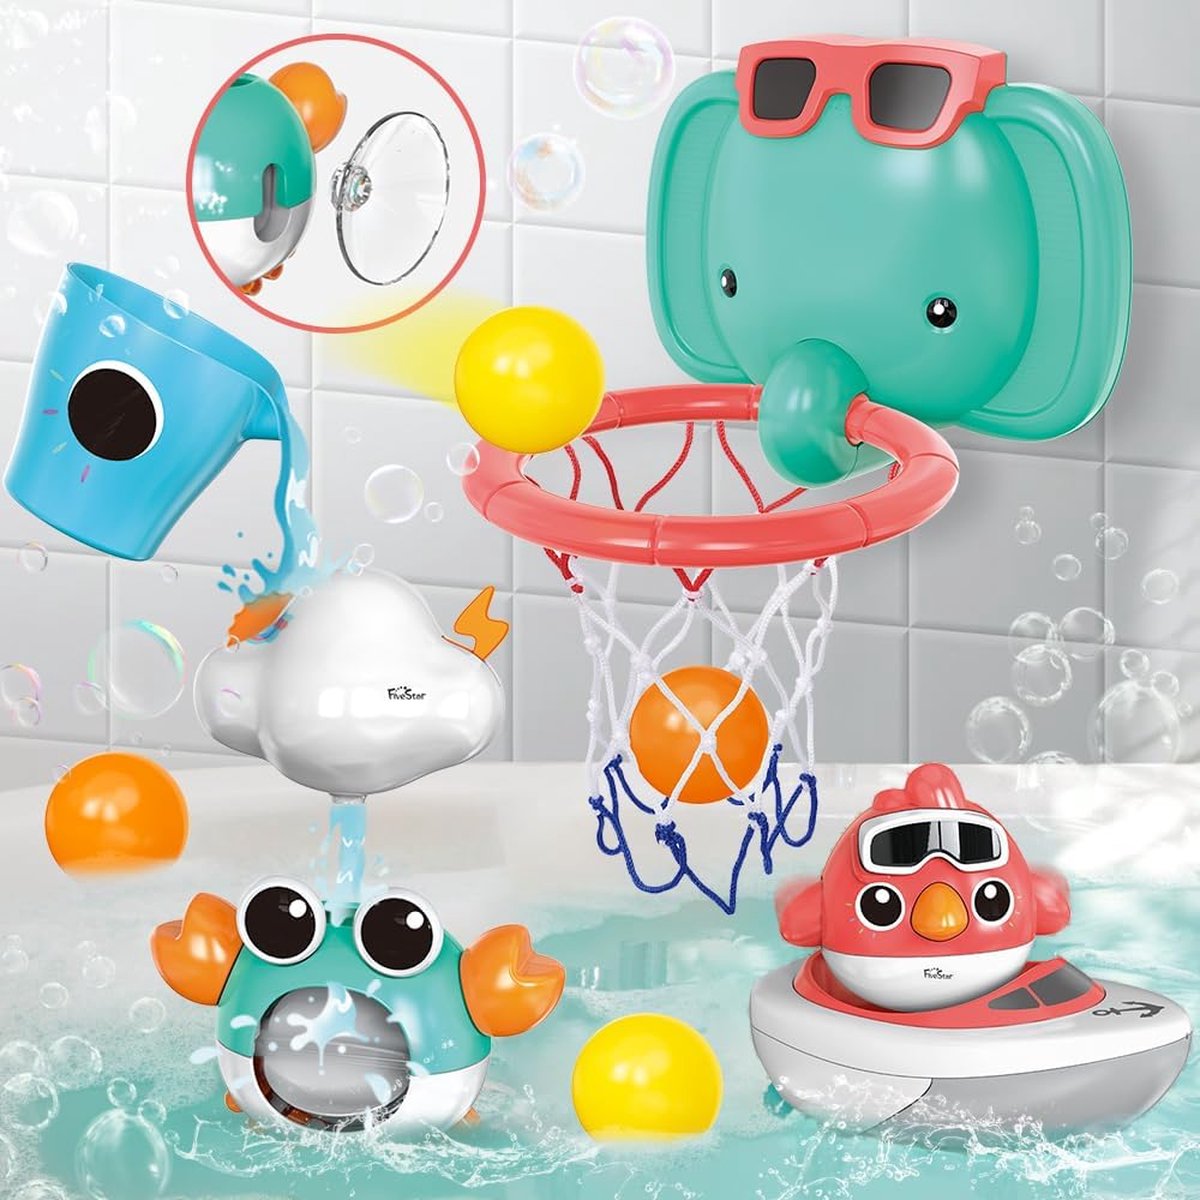 SHOP YOLO- Baby Badspeelgoed-6-in-1 drop-in speelgoed-olifant basketbal frame-vogel-krab-wolken-badspeelgoed voor kleine kinderen